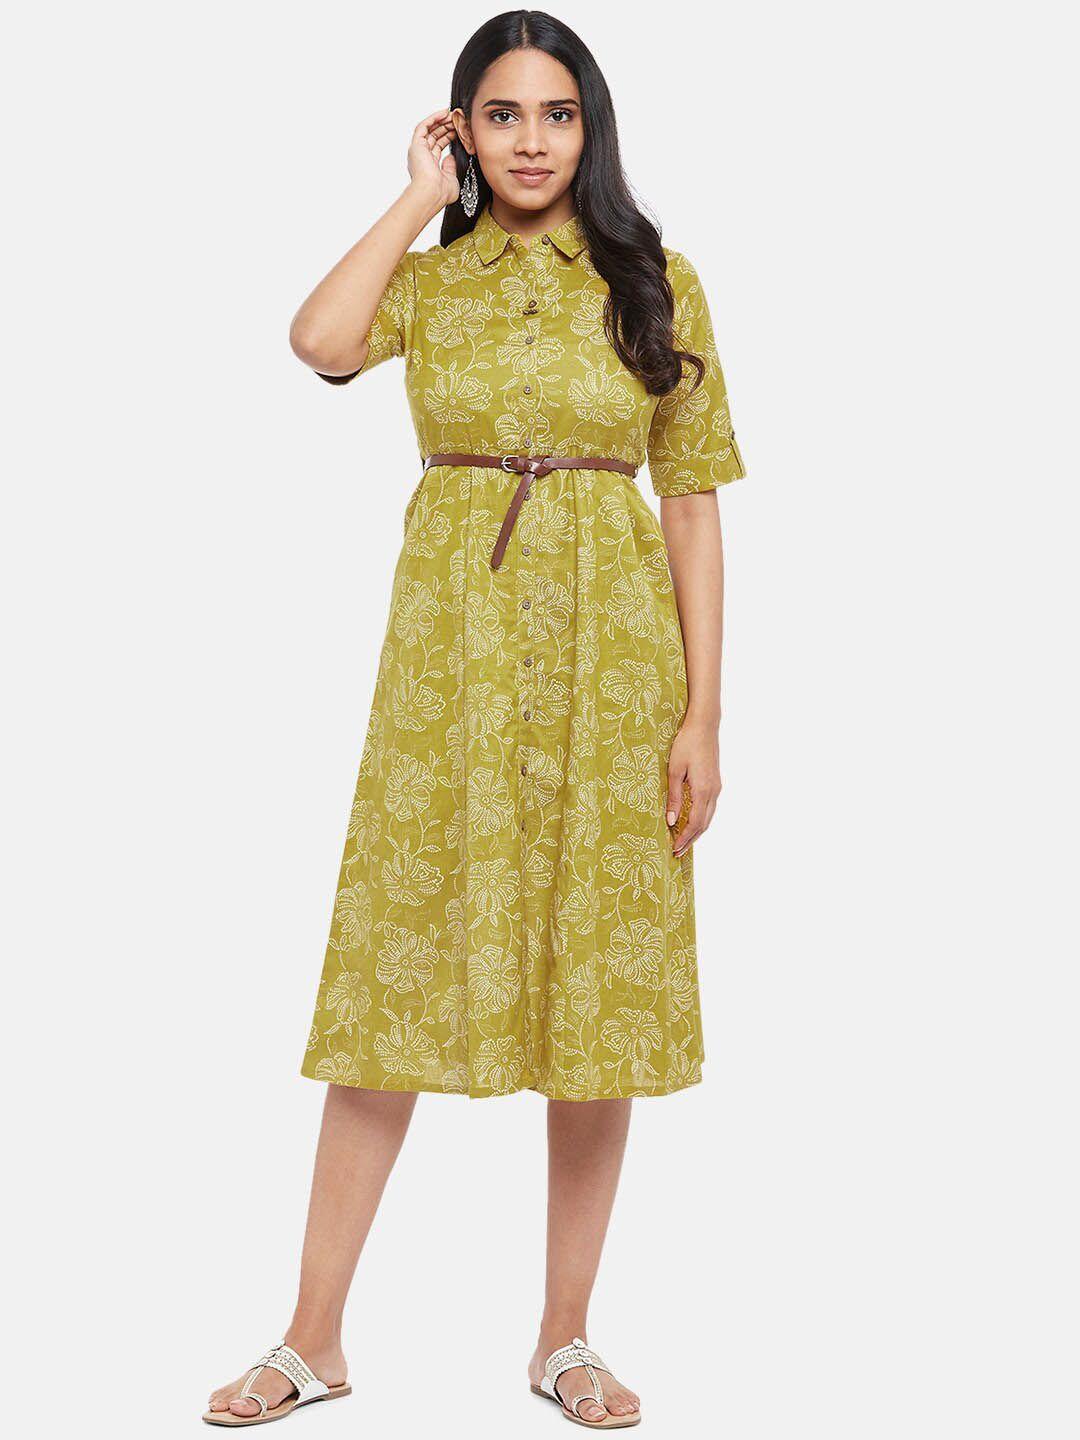 akkriti-by-pantaloons-mustard-yellow-floral-printed-pure-cotton-shirt-midi-dress